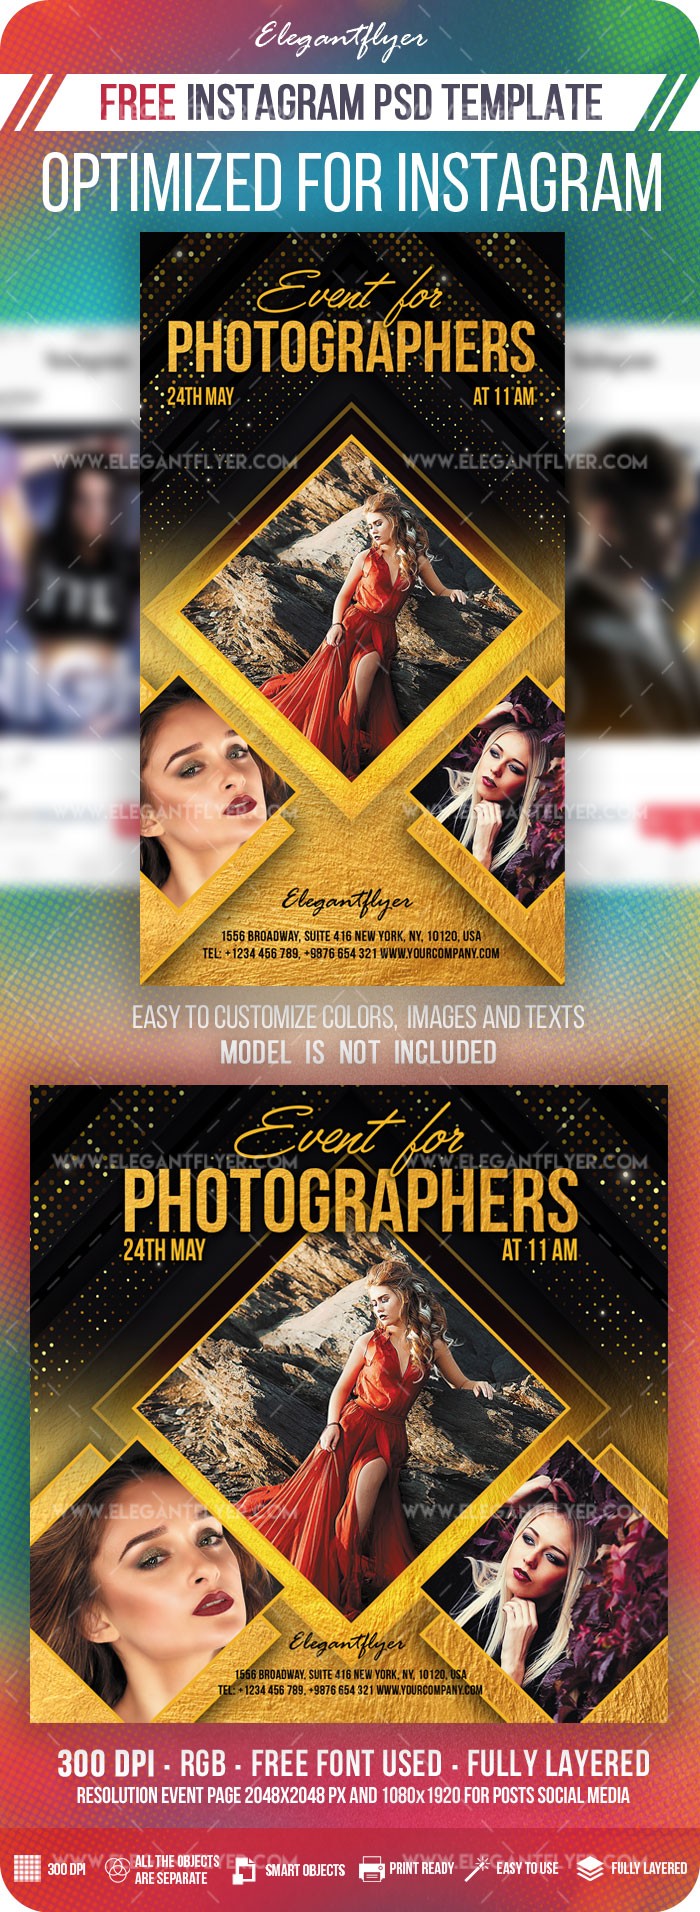 Event for Photographers by ElegantFlyer